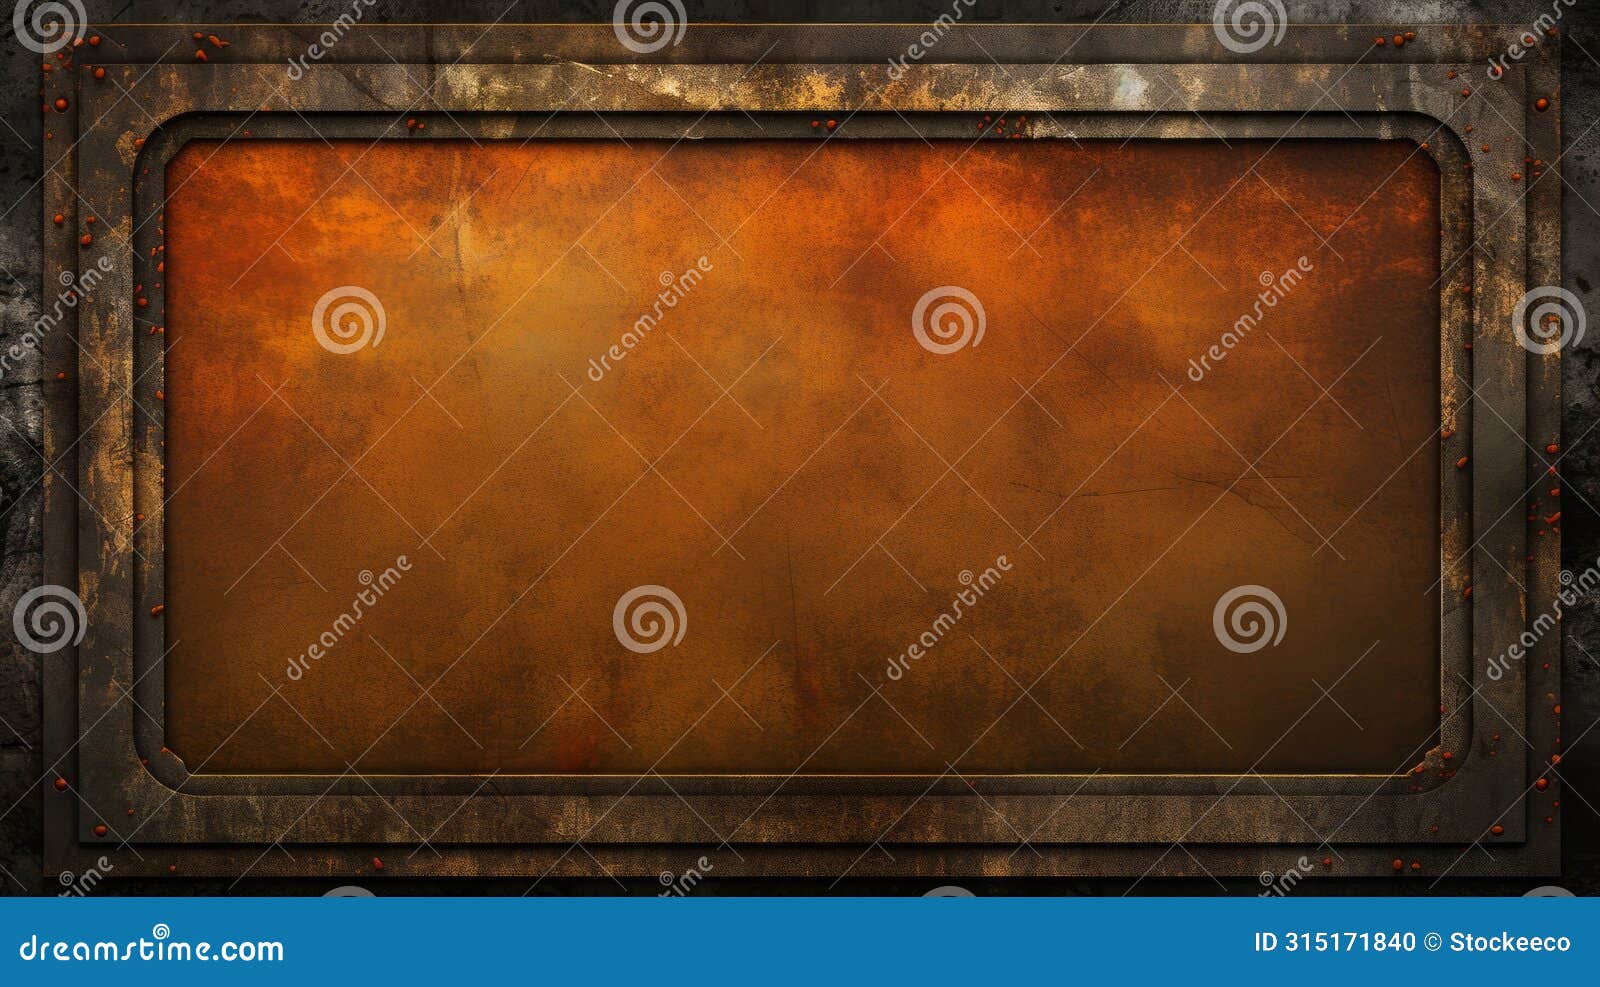 rusty metal frame mockup: dark gold and orange mythic imagery